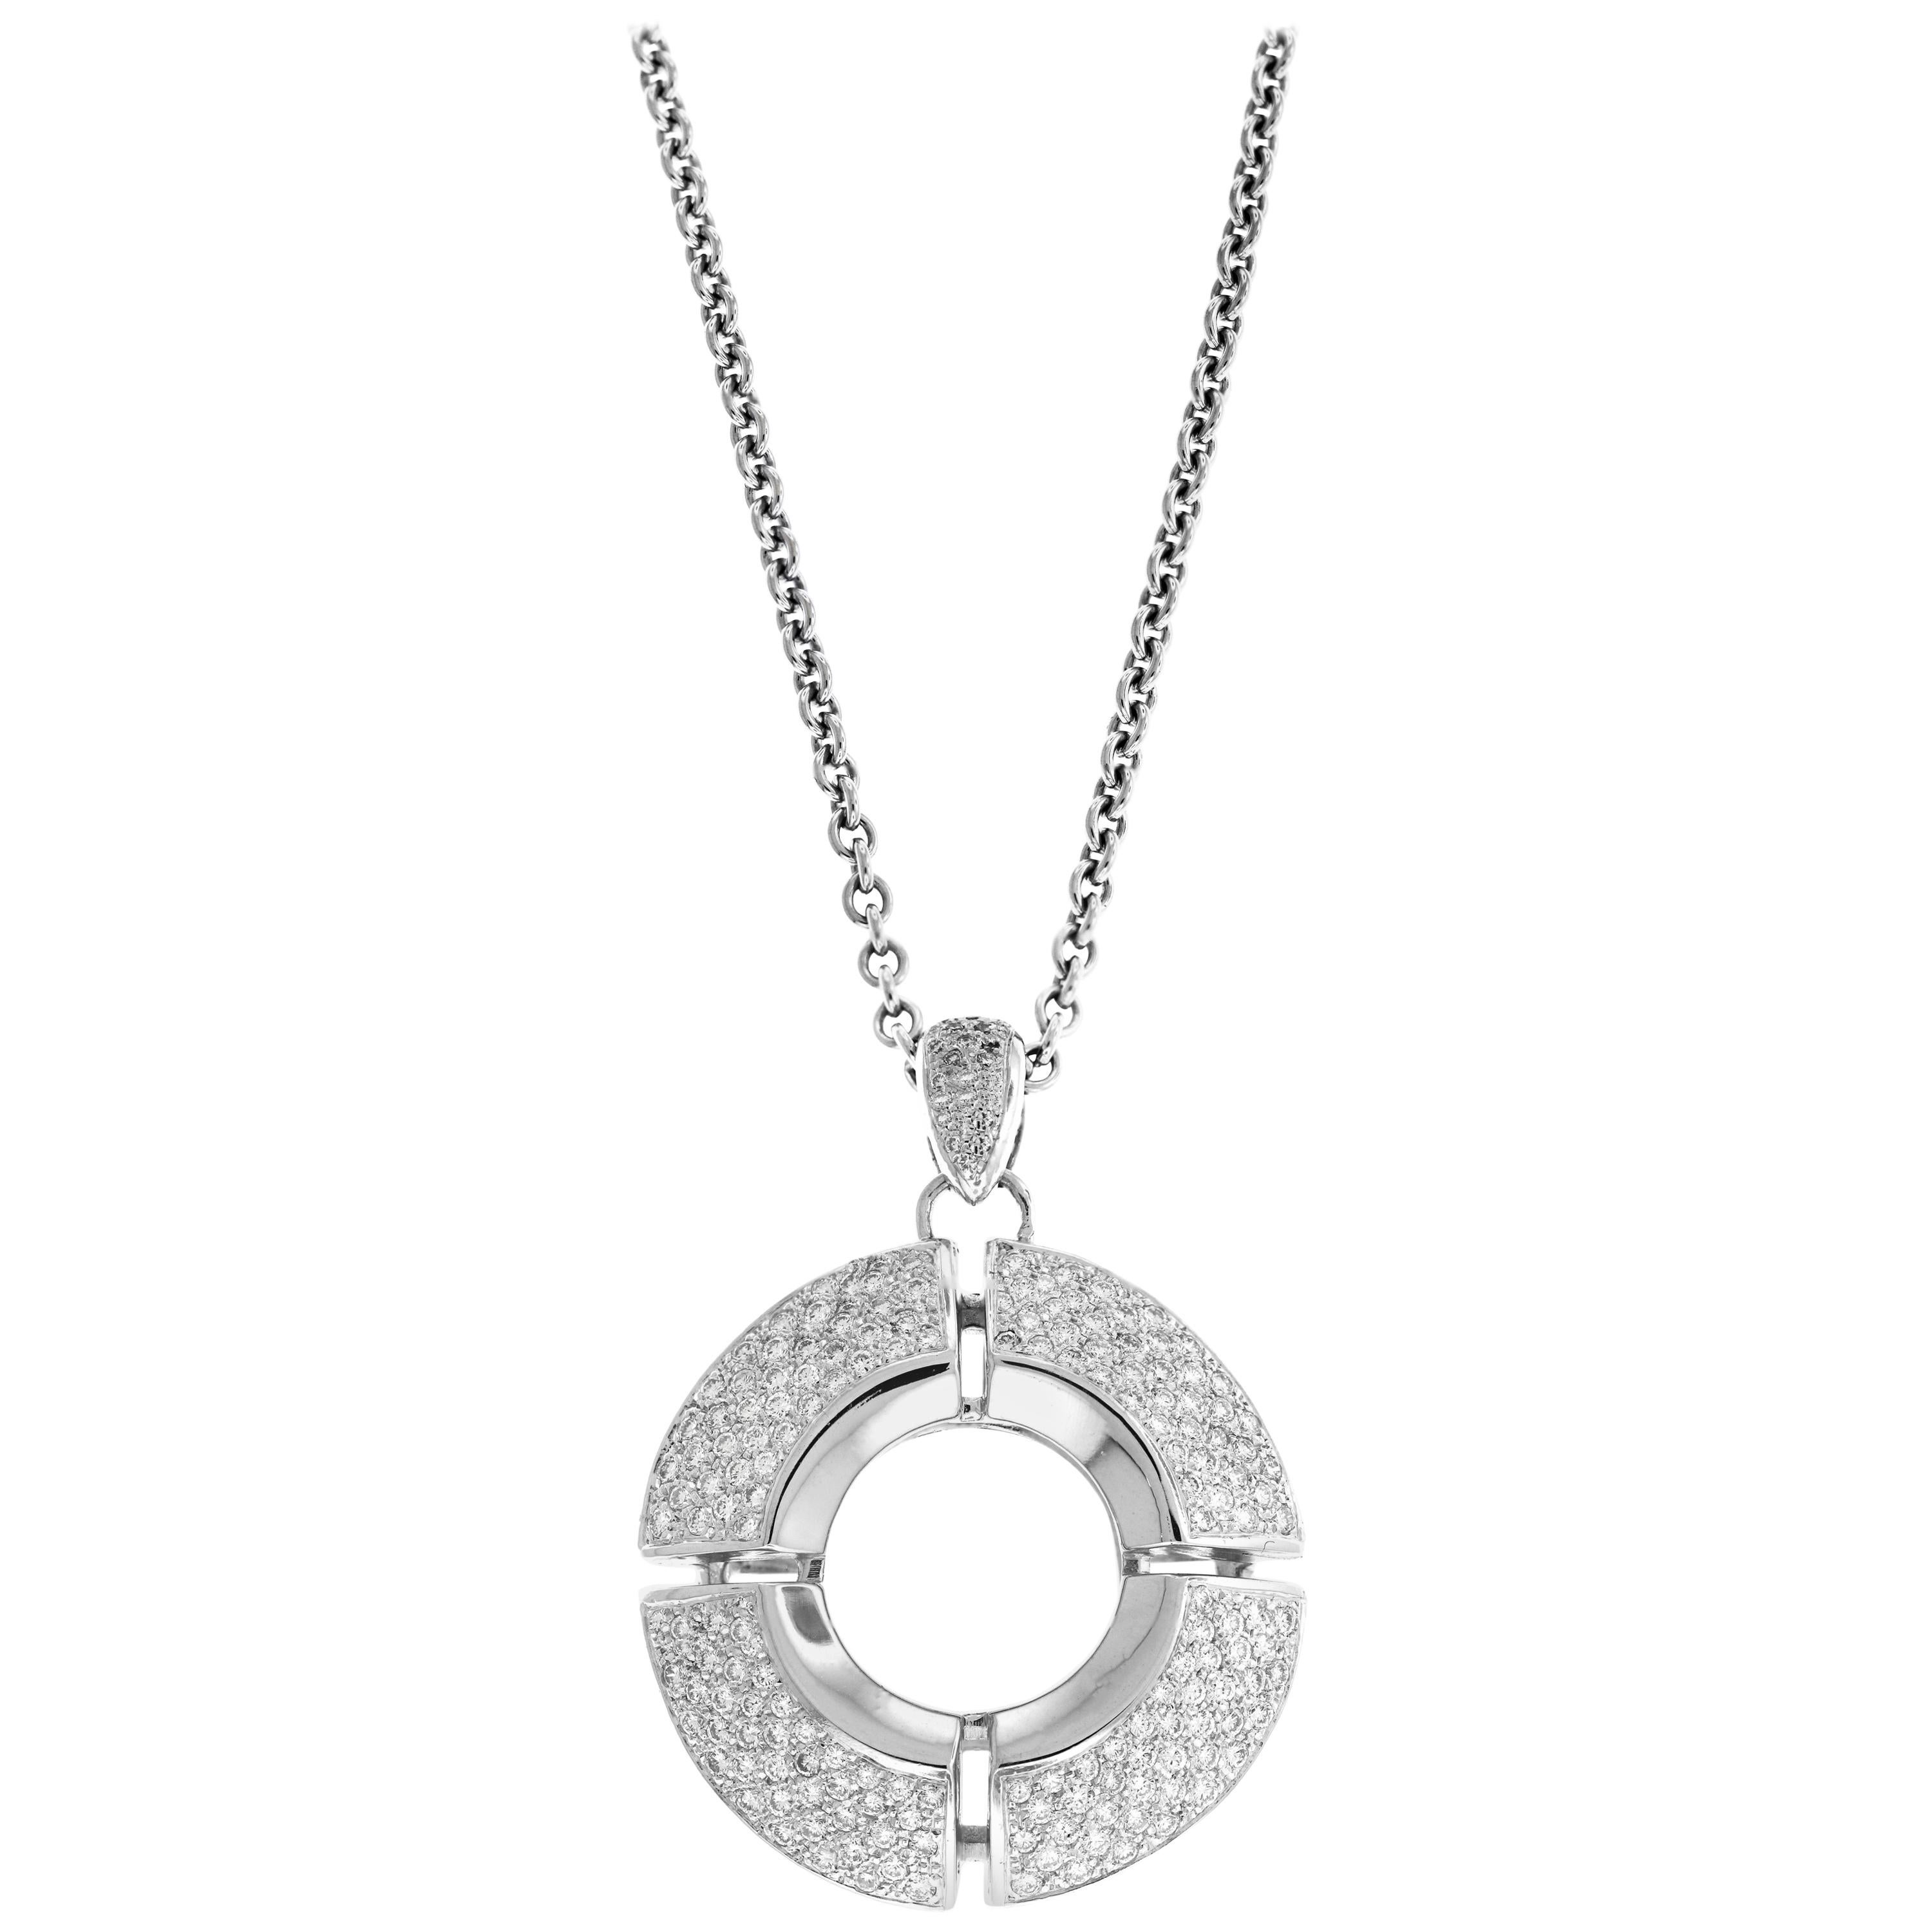 Antonini Platinum and White Gold Diamond Pendant Chain Necklace